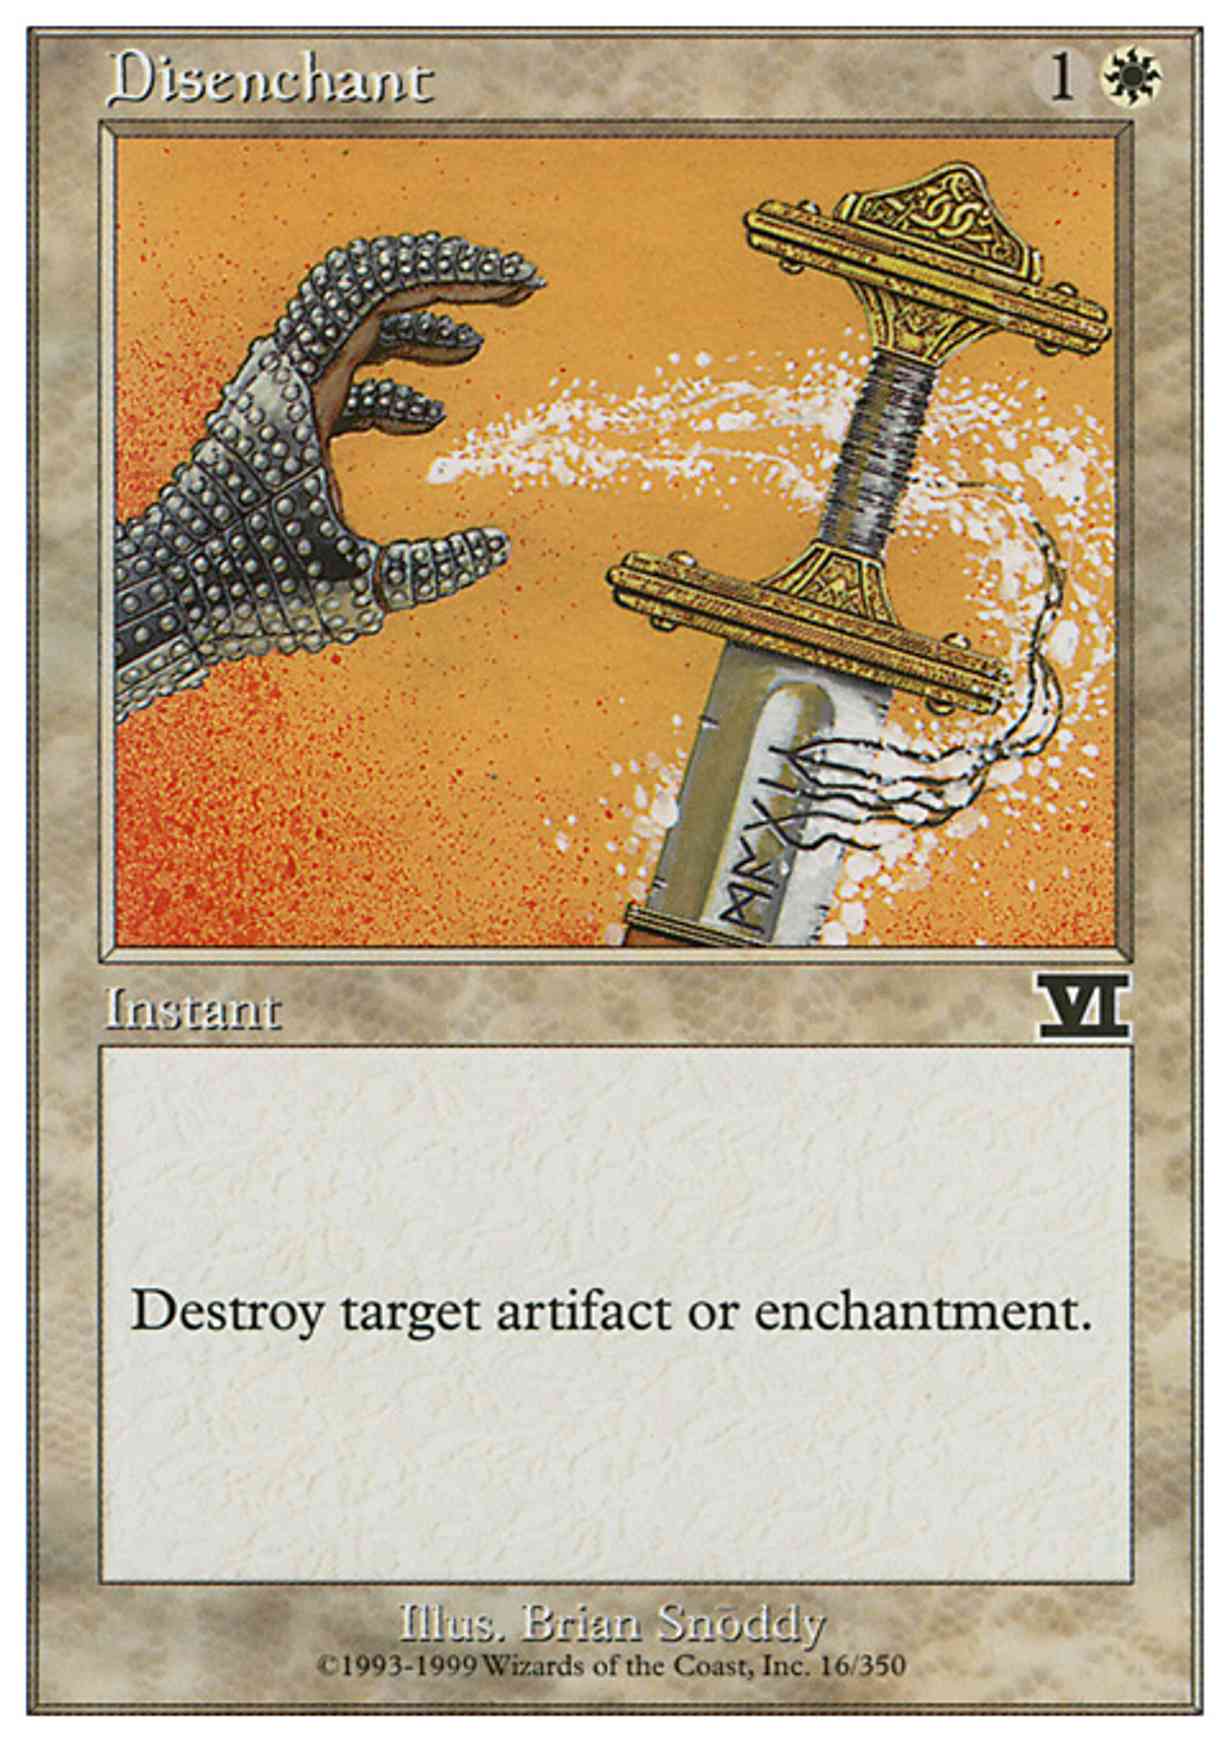 Disenchant magic card front